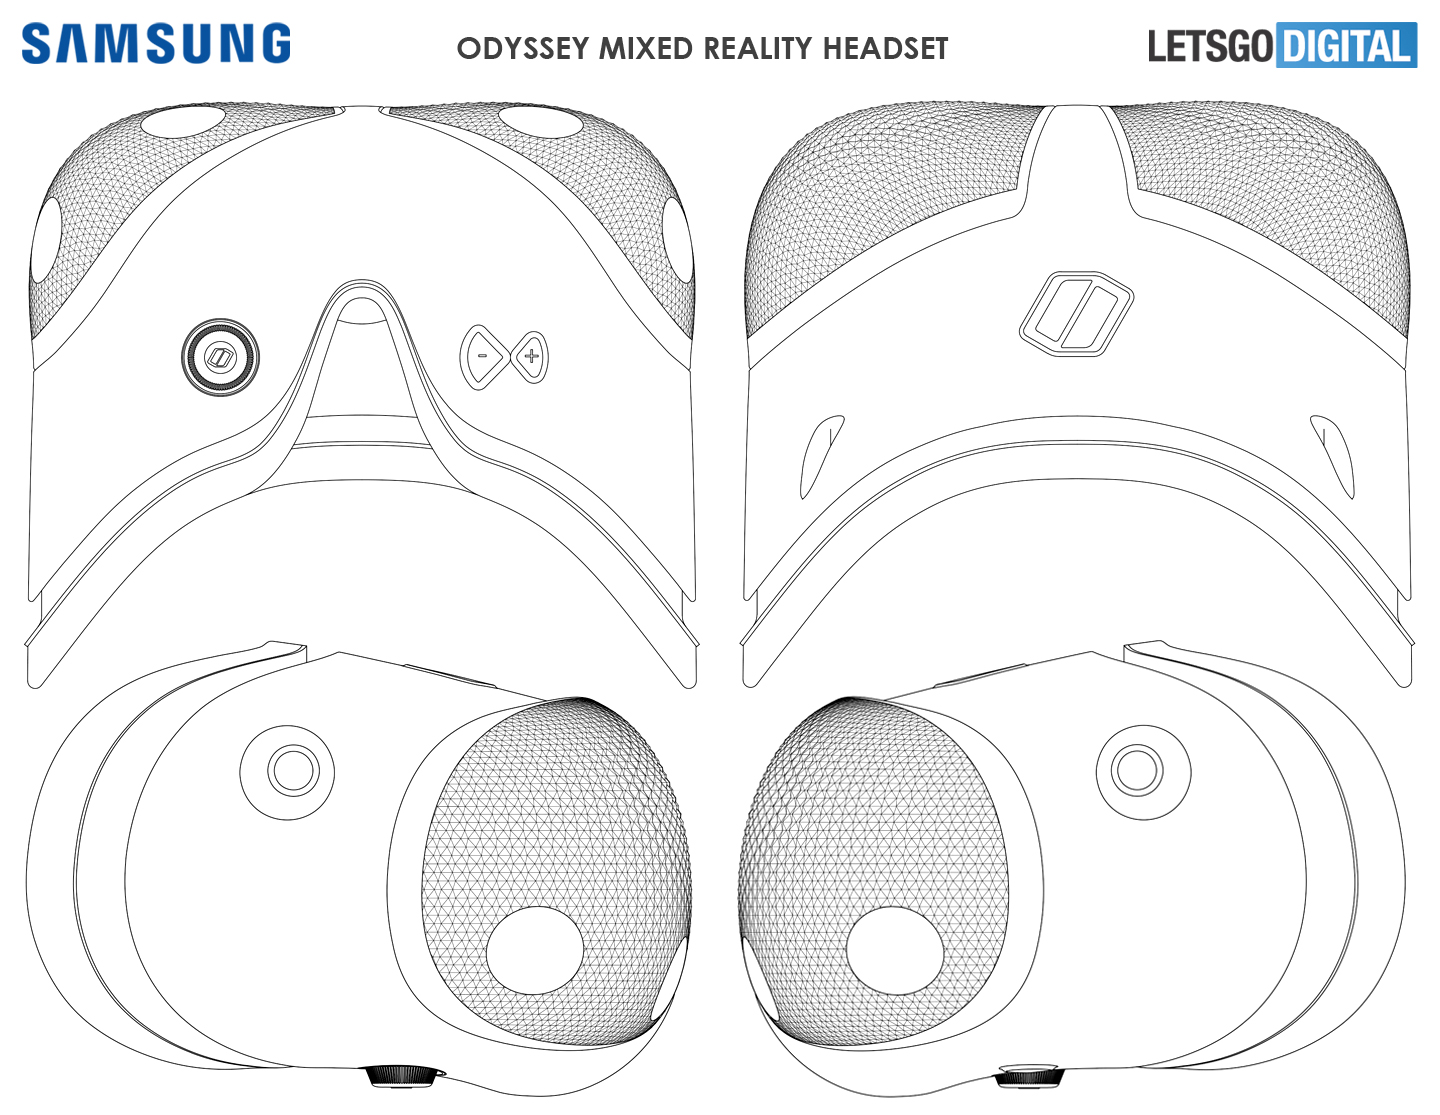 Samsung virtual reality headset 2020